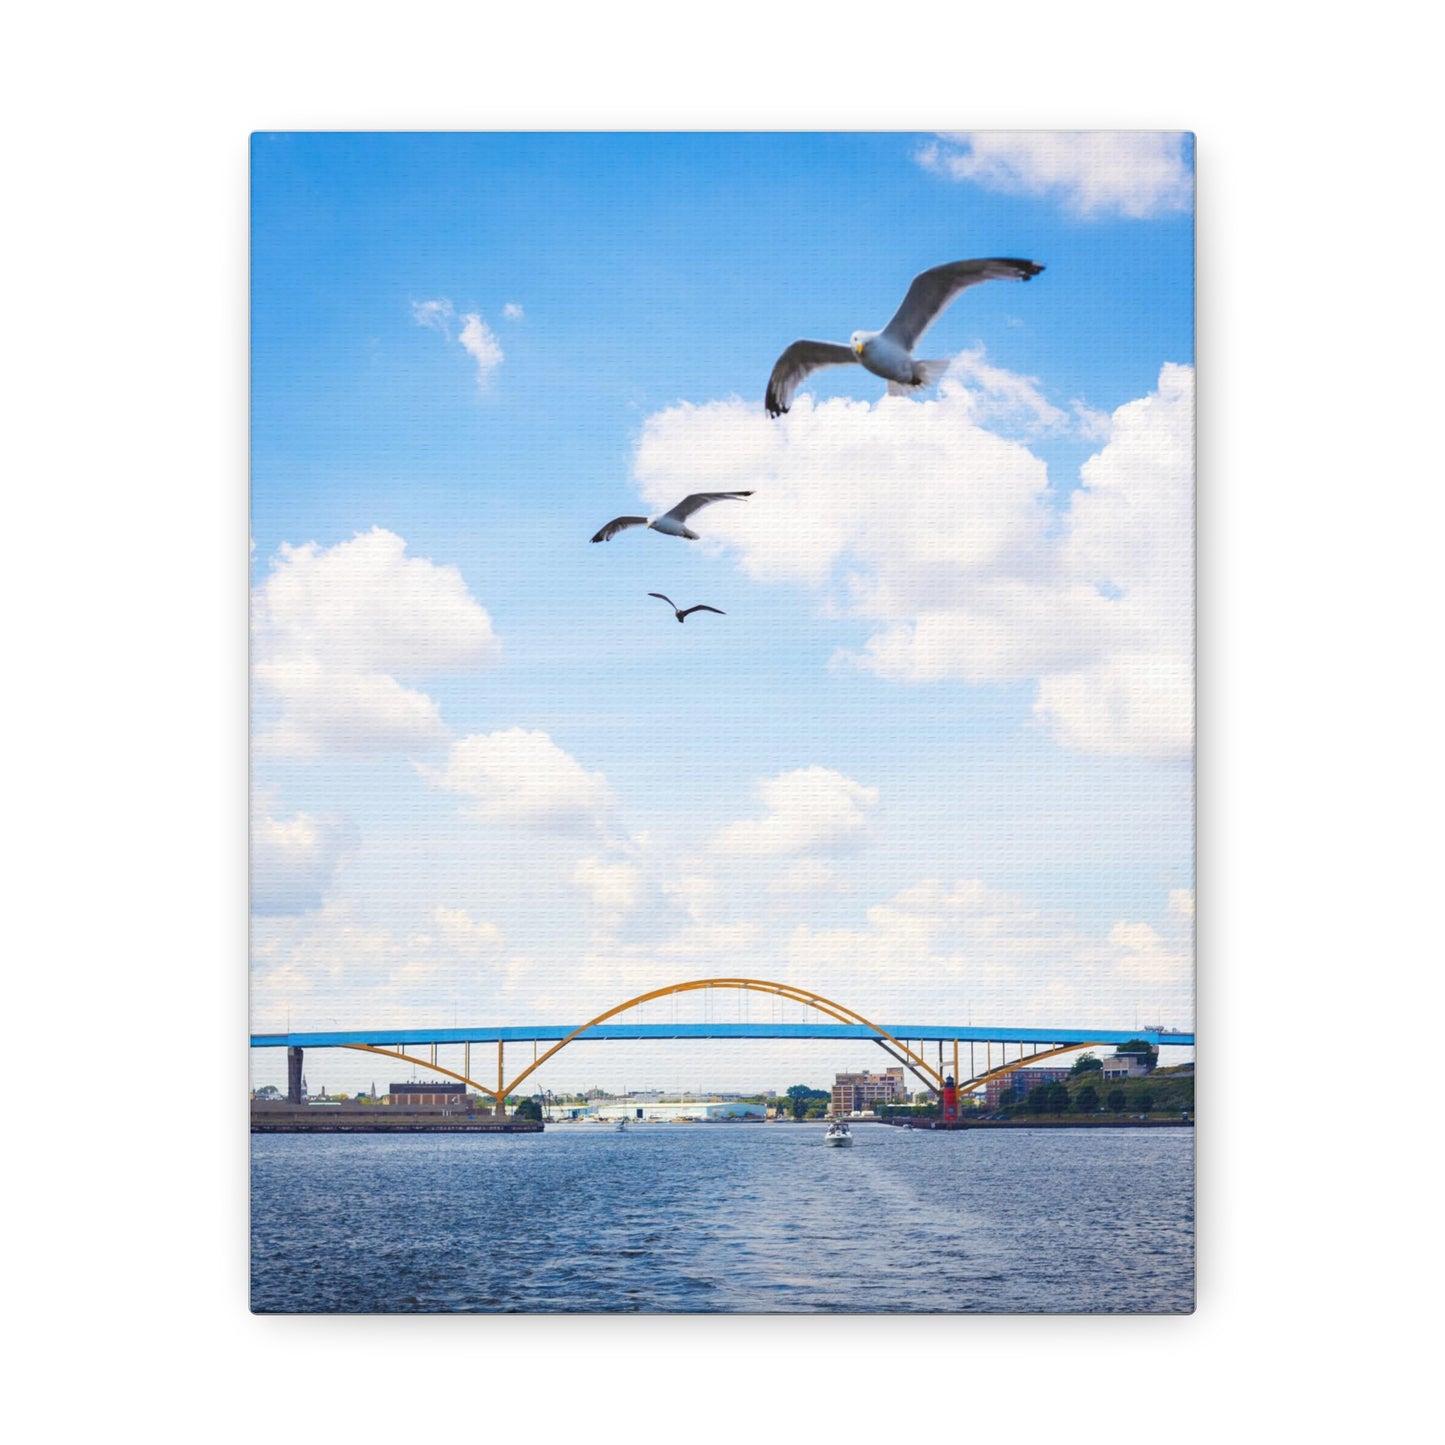 Milwaukee Wisconsin’s Hoan Bridge with 3 Seagulls, Photography Canvas Wrap Wall Art